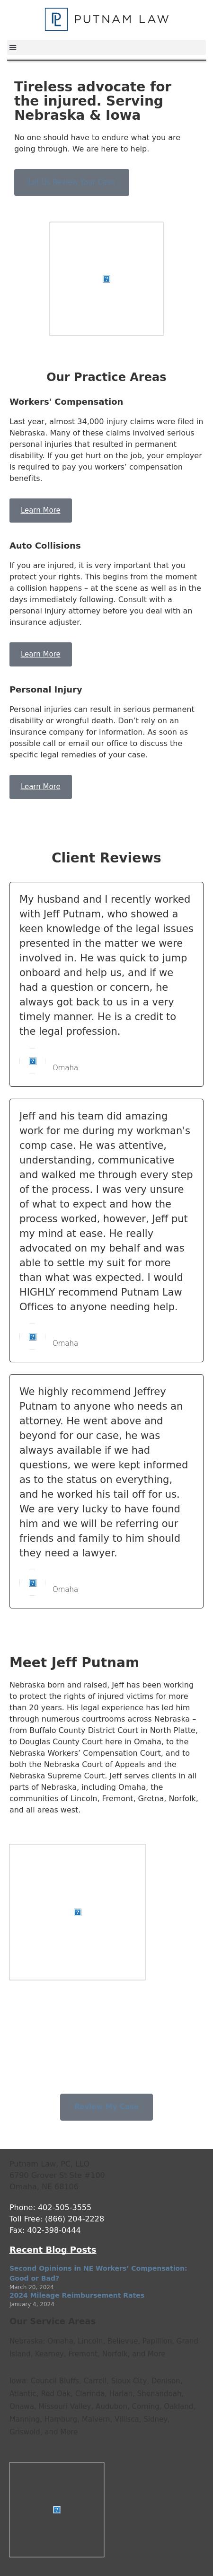 Law Offices Of Jeffrey F. Putnam, PC - Omaha NE Lawyers